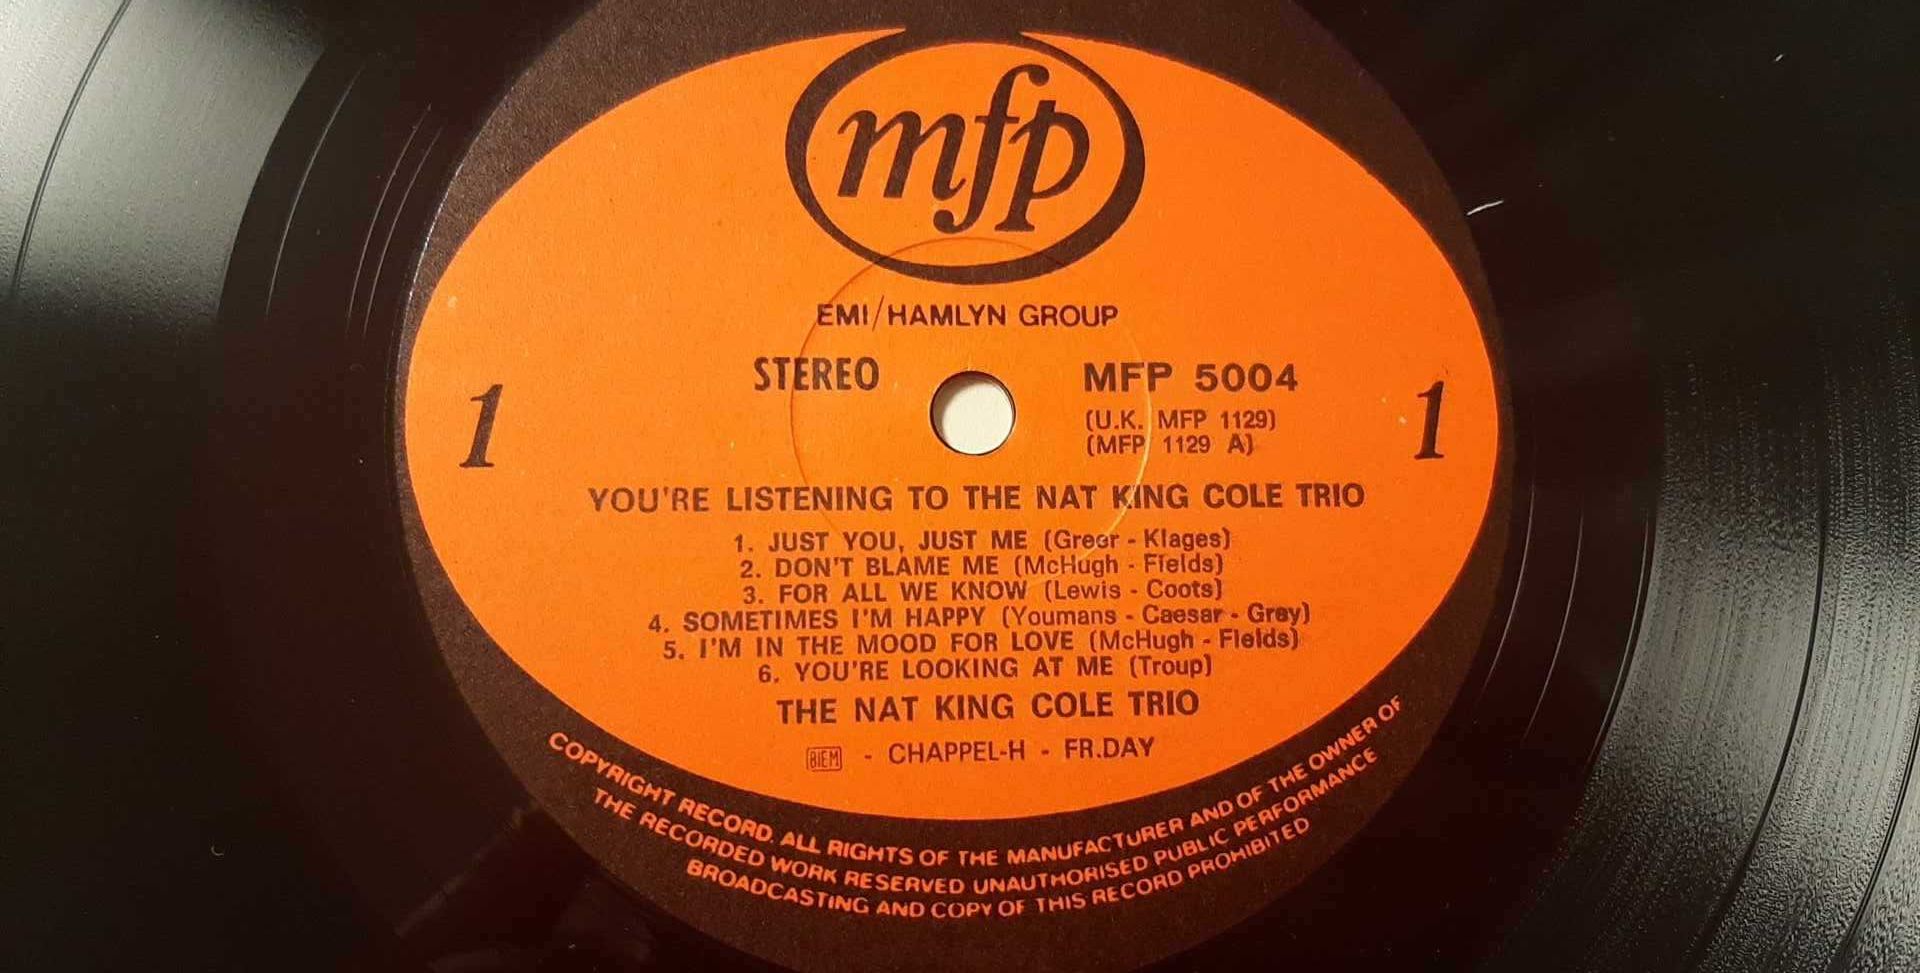 Nat King Cole and The Nat King Cole Trio - płyta winylowa